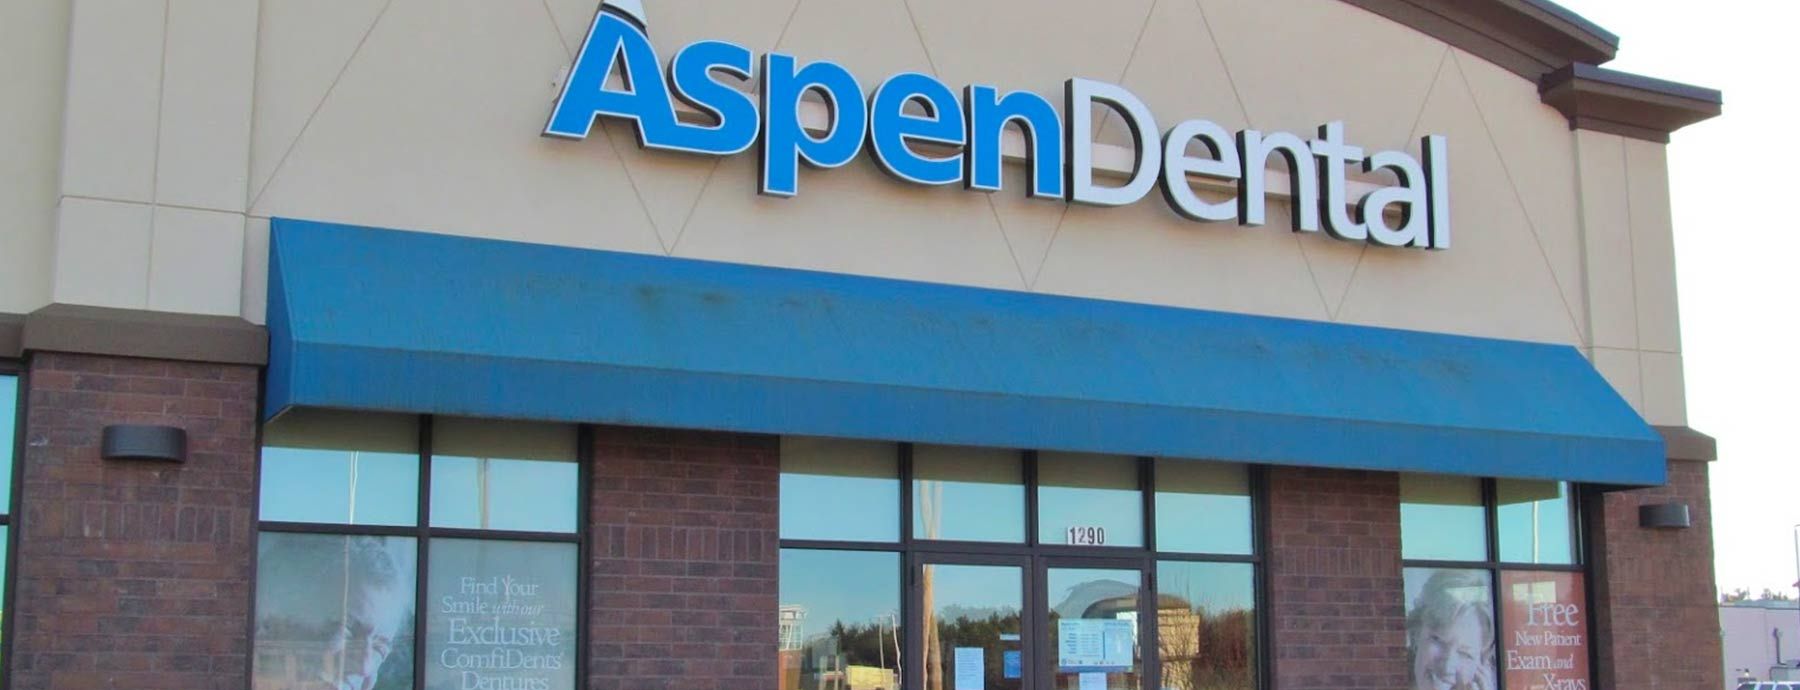 Commercial Property in Plover Wisconsin - Aspen Dental